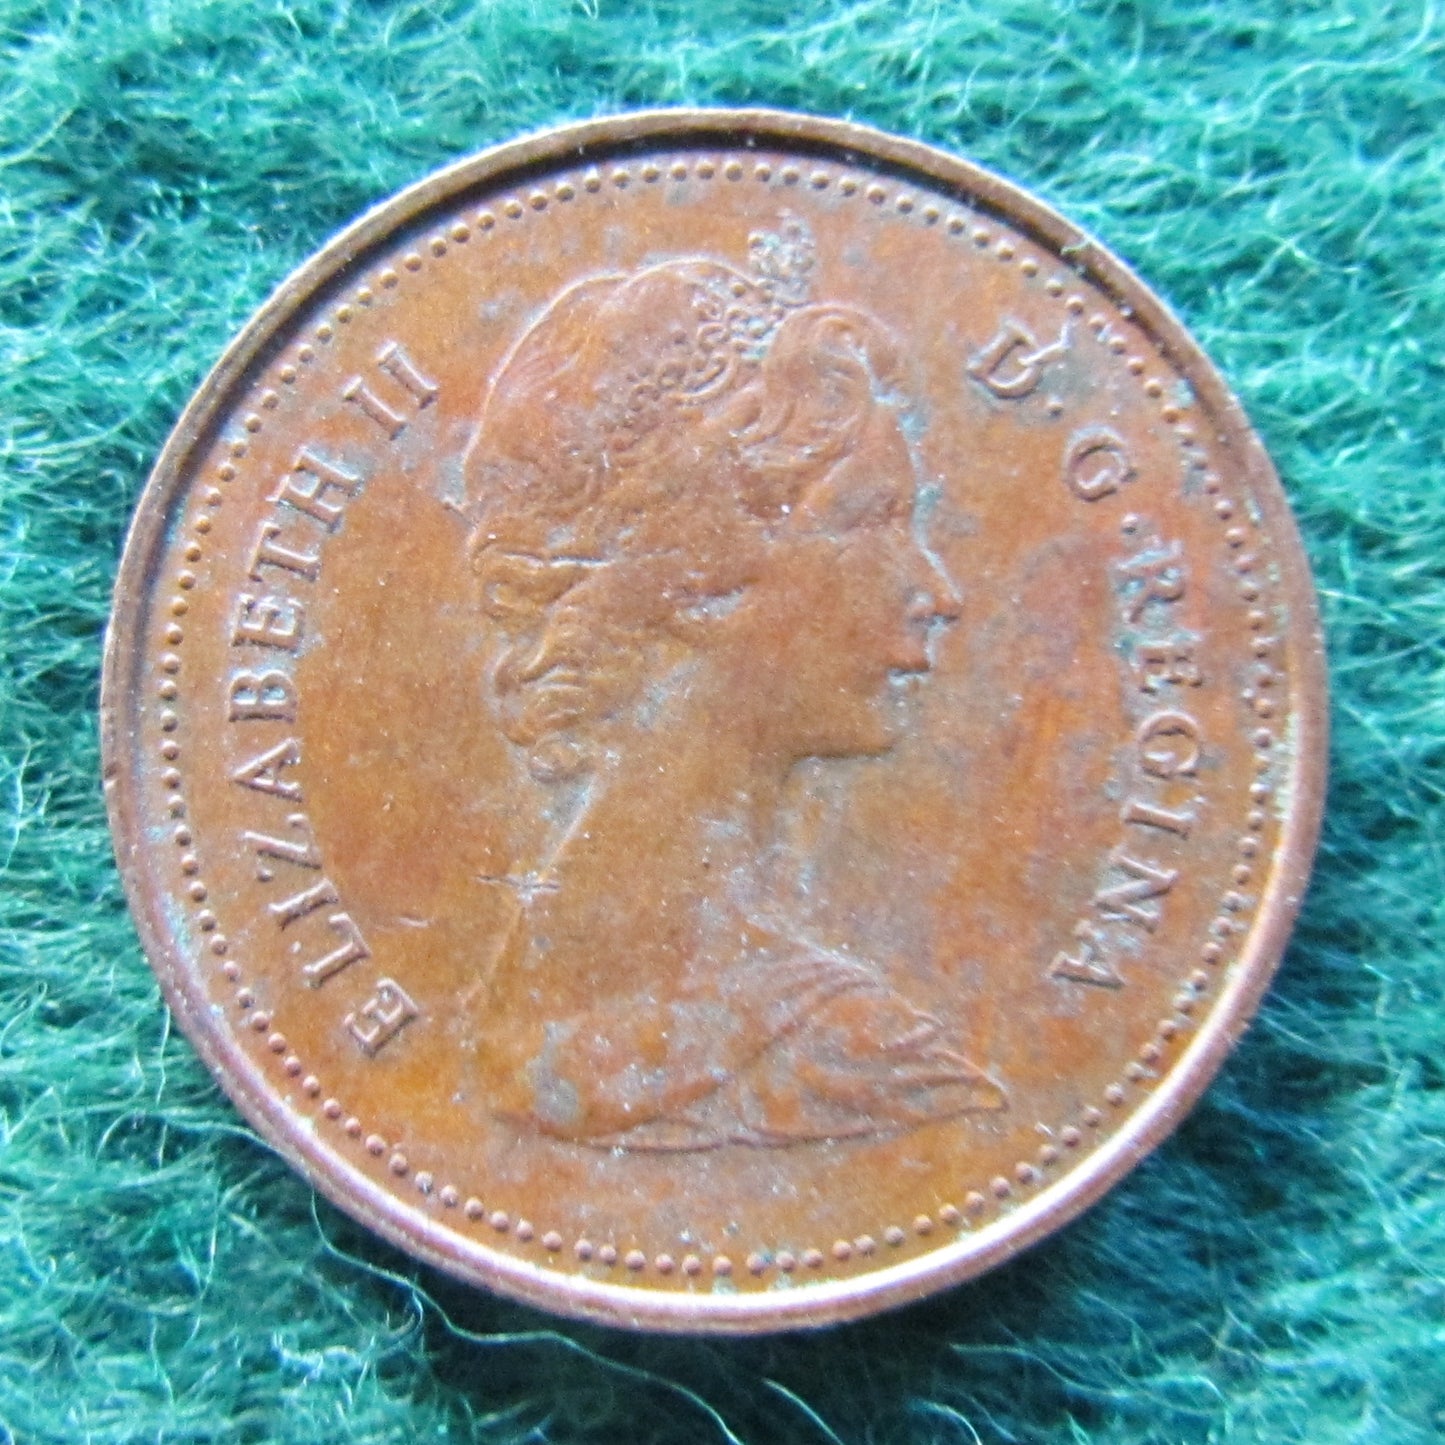 Canada 1981 1 Cent Queen Elizabeth II Coin - Circulated